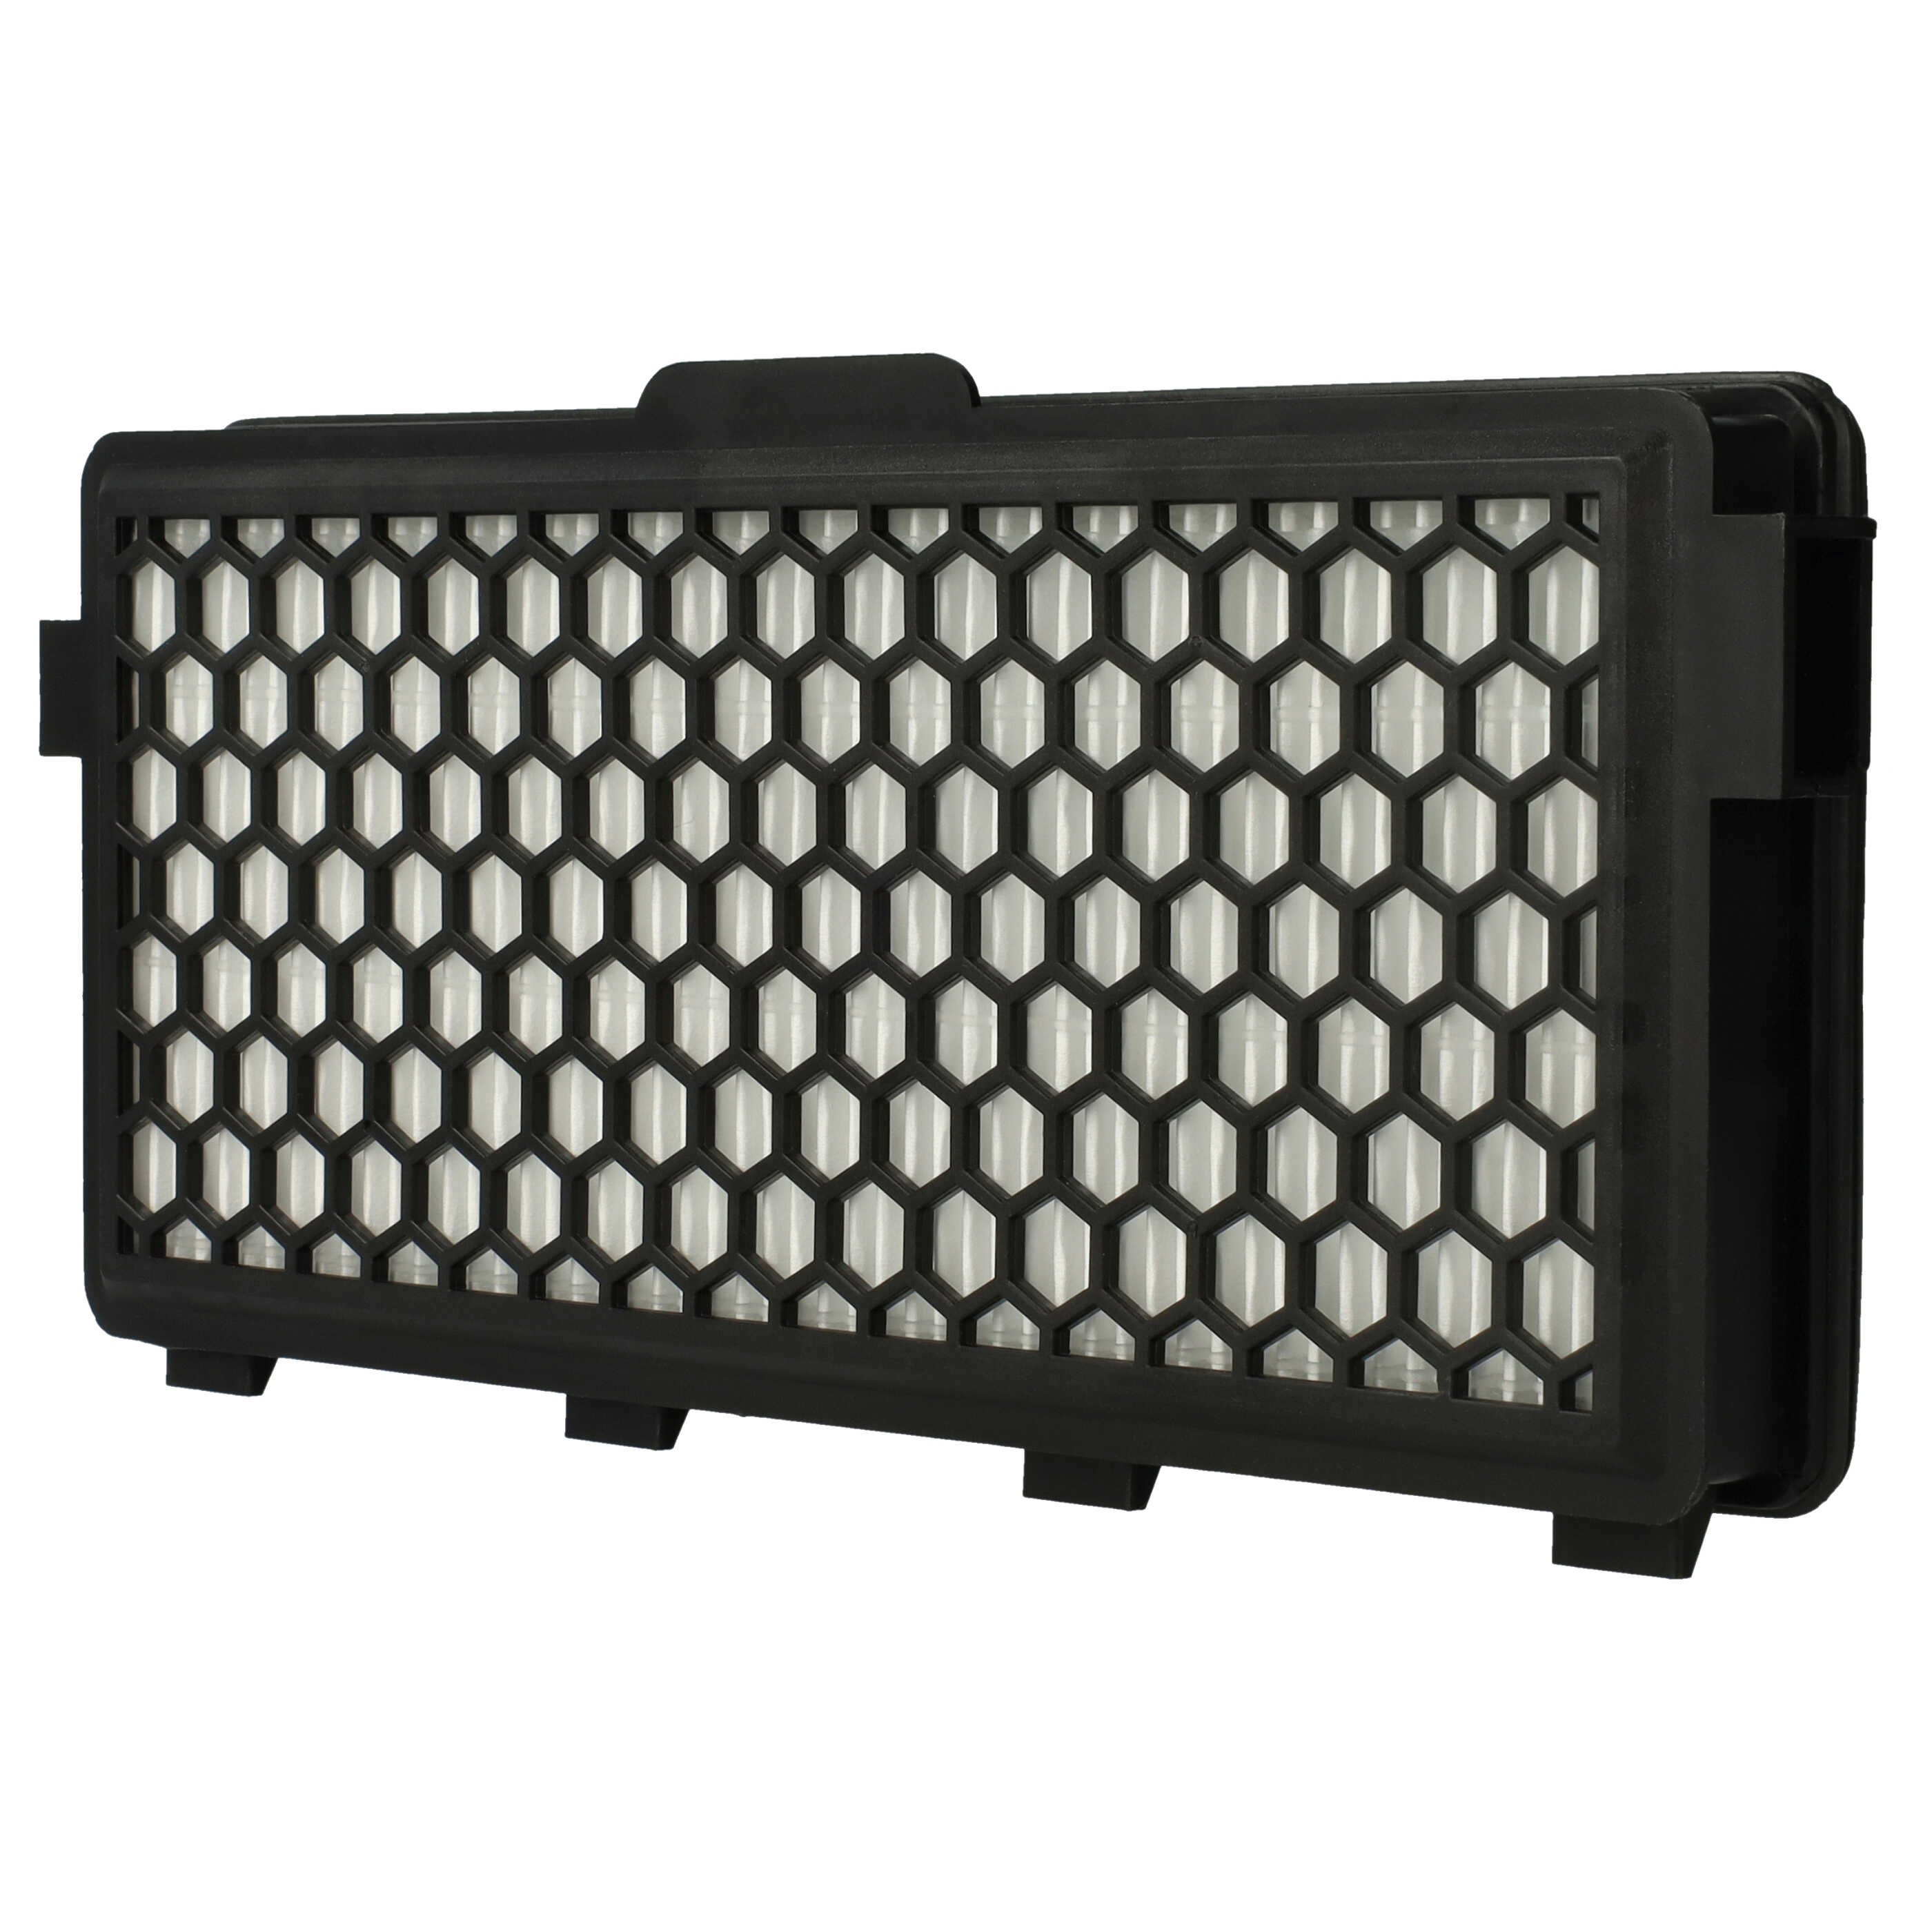 Filtro reemplaza Miele 5996880, 5996882, 5996881 para aspiradora - filtro de escape HEPA negro / blanco